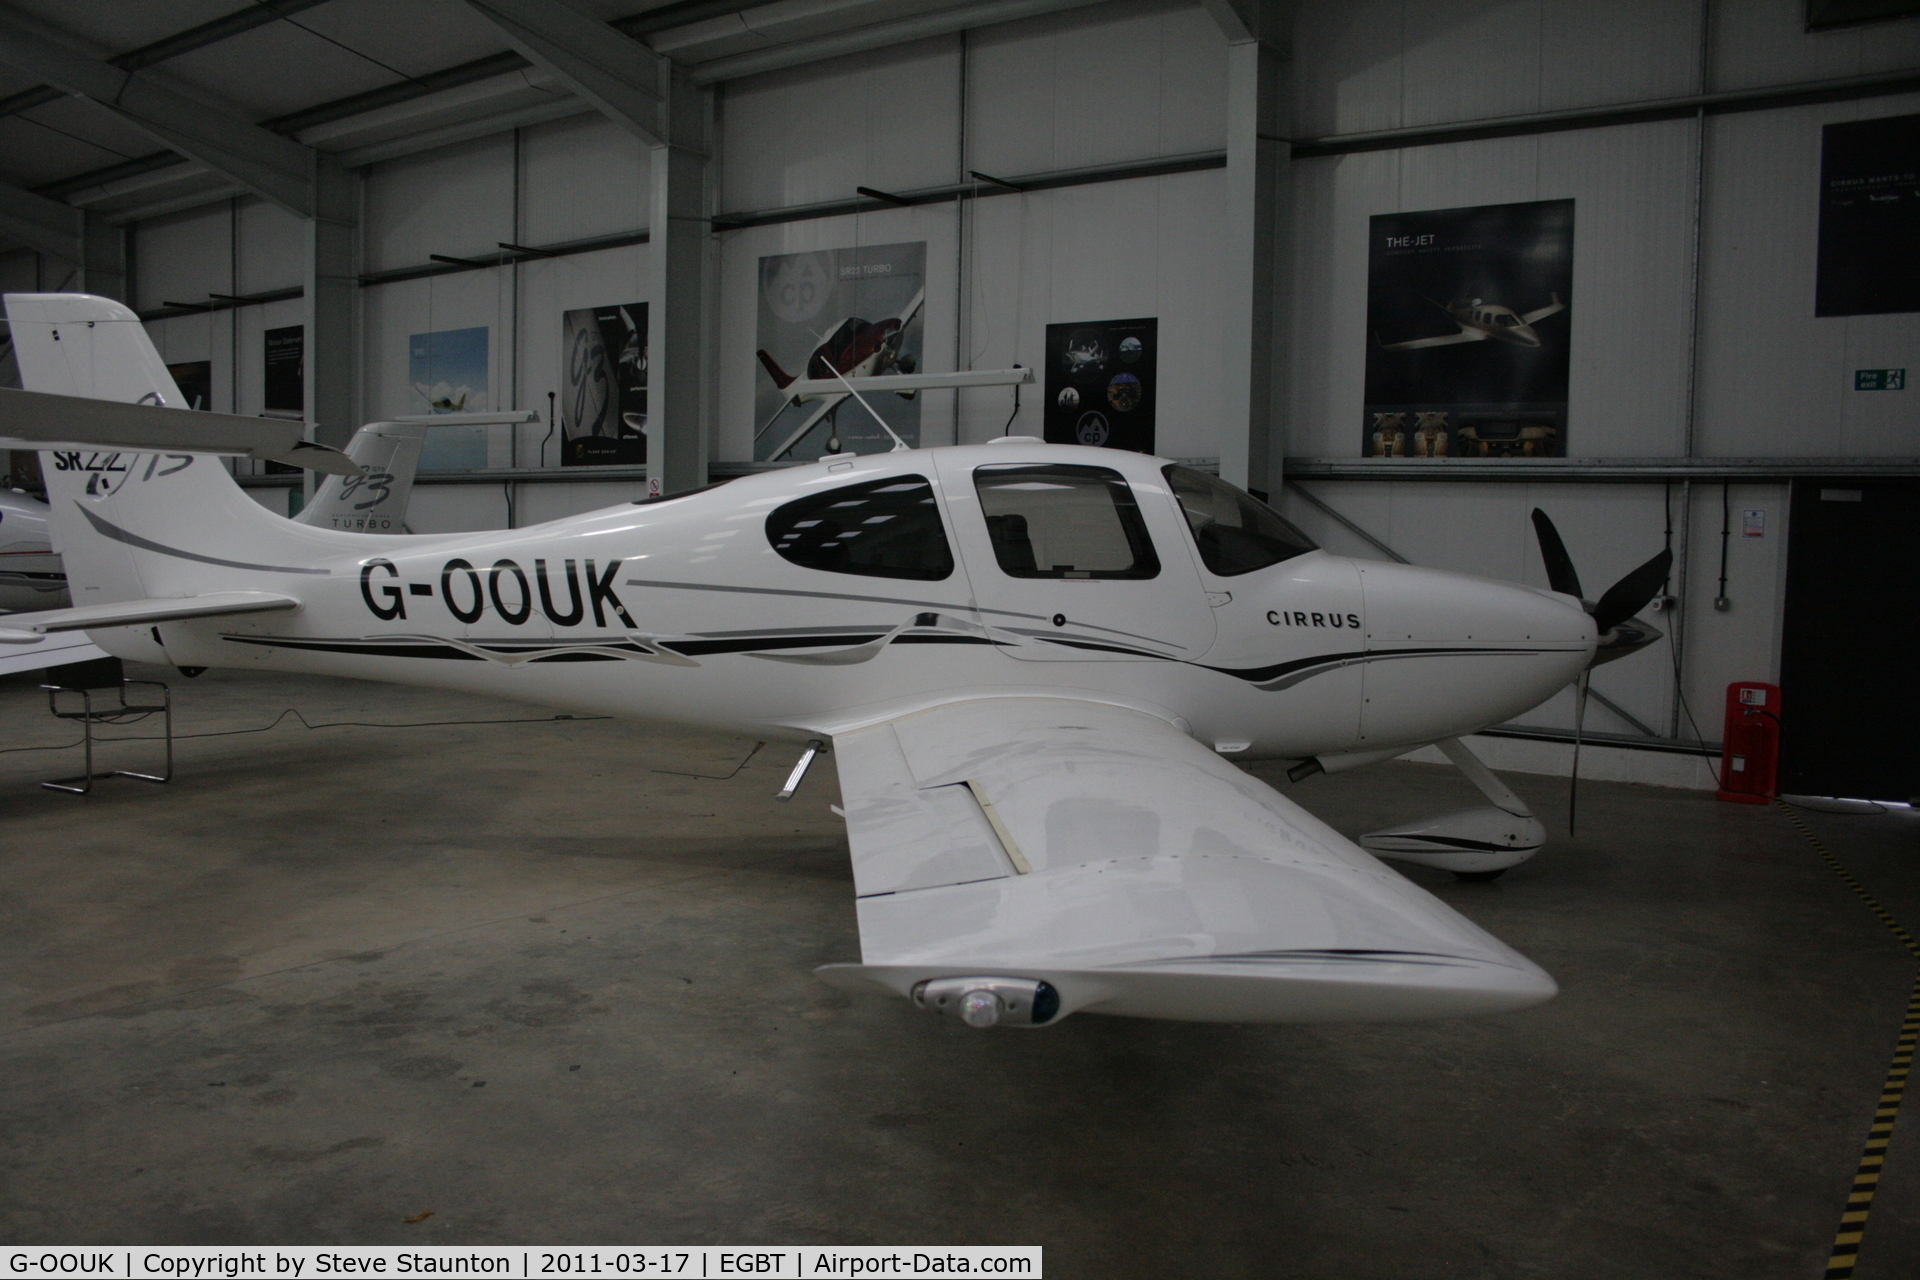 G-OOUK, 2005 Cirrus SR22 GTS C/N 1463, Taken at Turweston Airfield March 2010